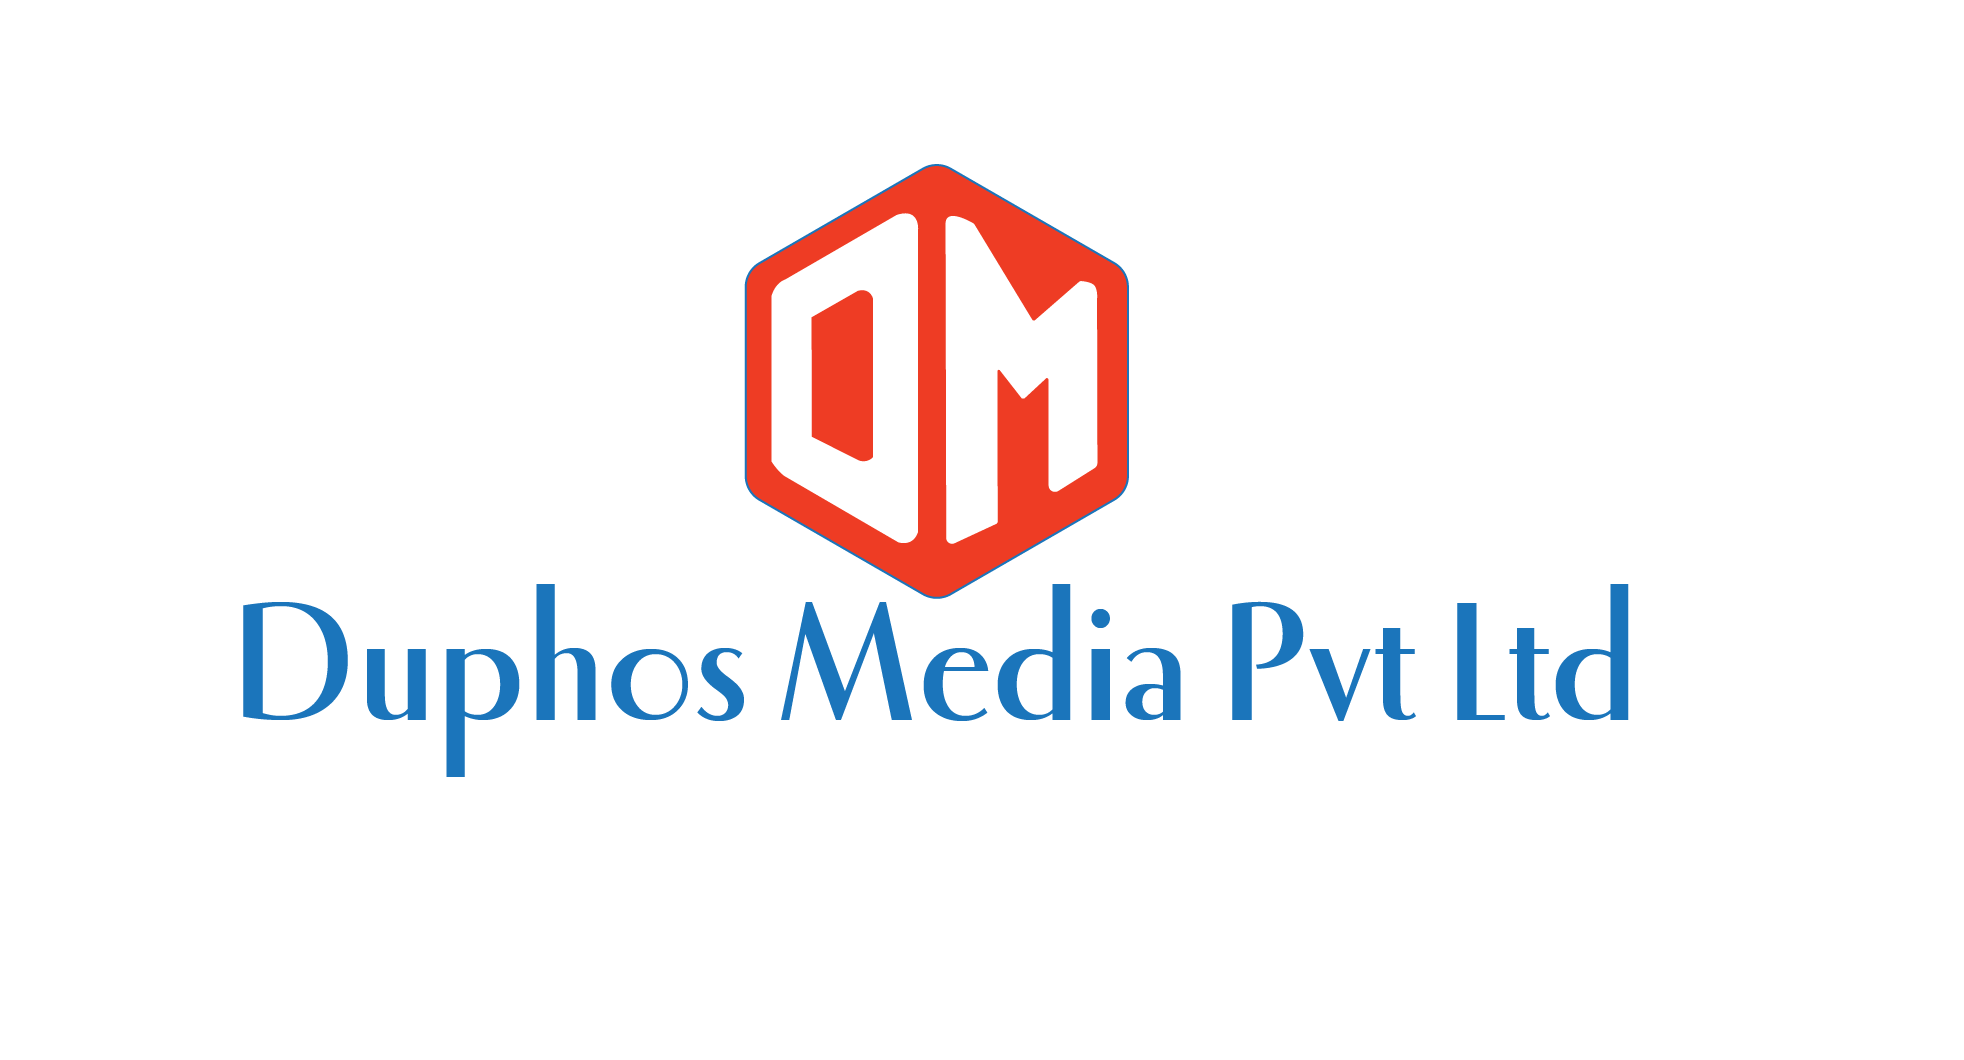 Duphos Media PVT LTD profile on Qualified.One